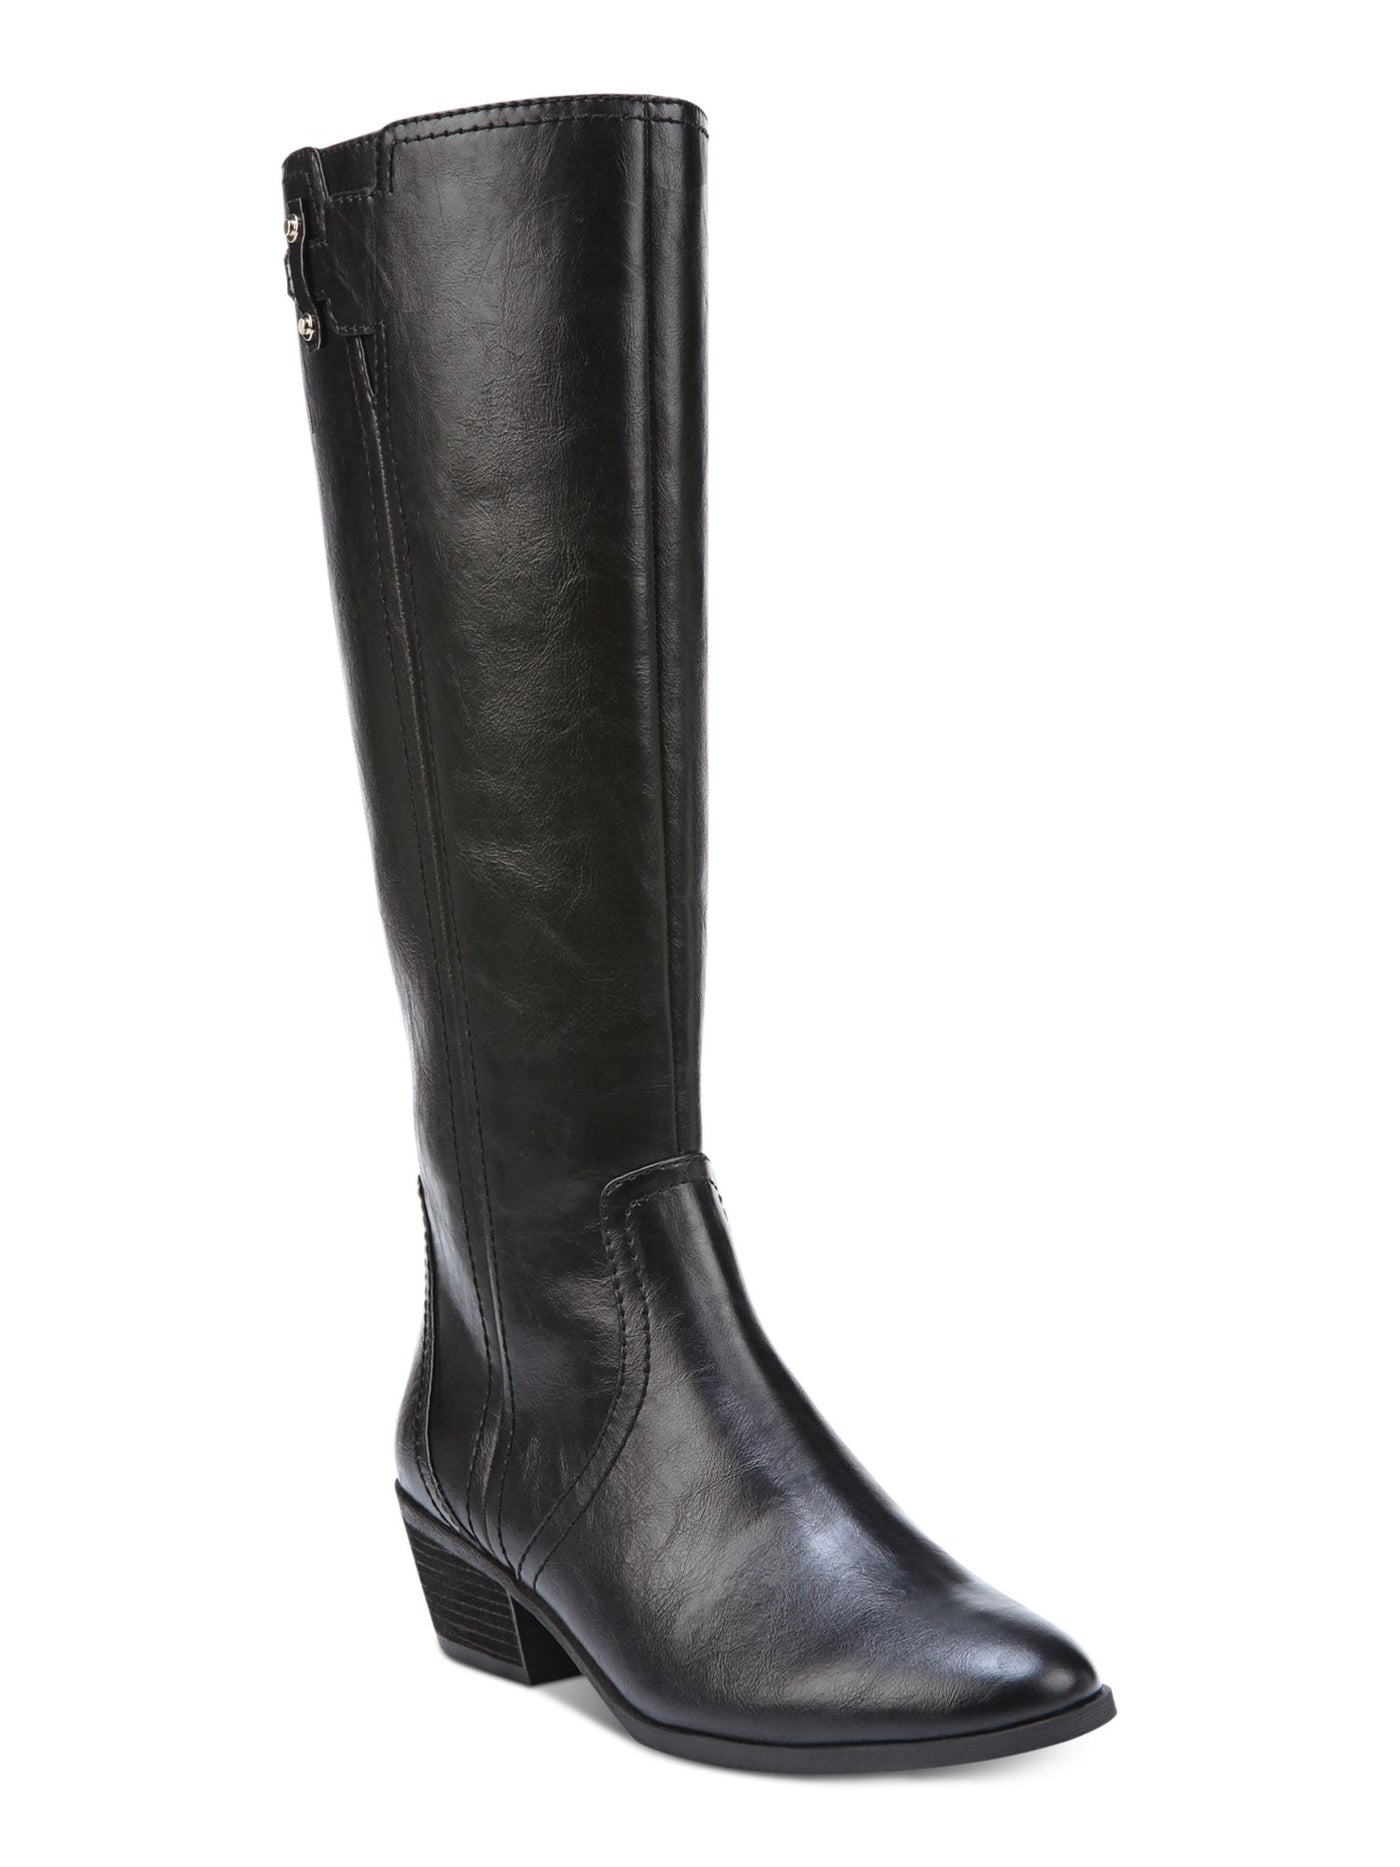 DR SCHOLLS Womens Black Strap Detail Buckle Accent Brilliance Almond Toe Block Heel Zip-Up Riding Boot 6.5 M